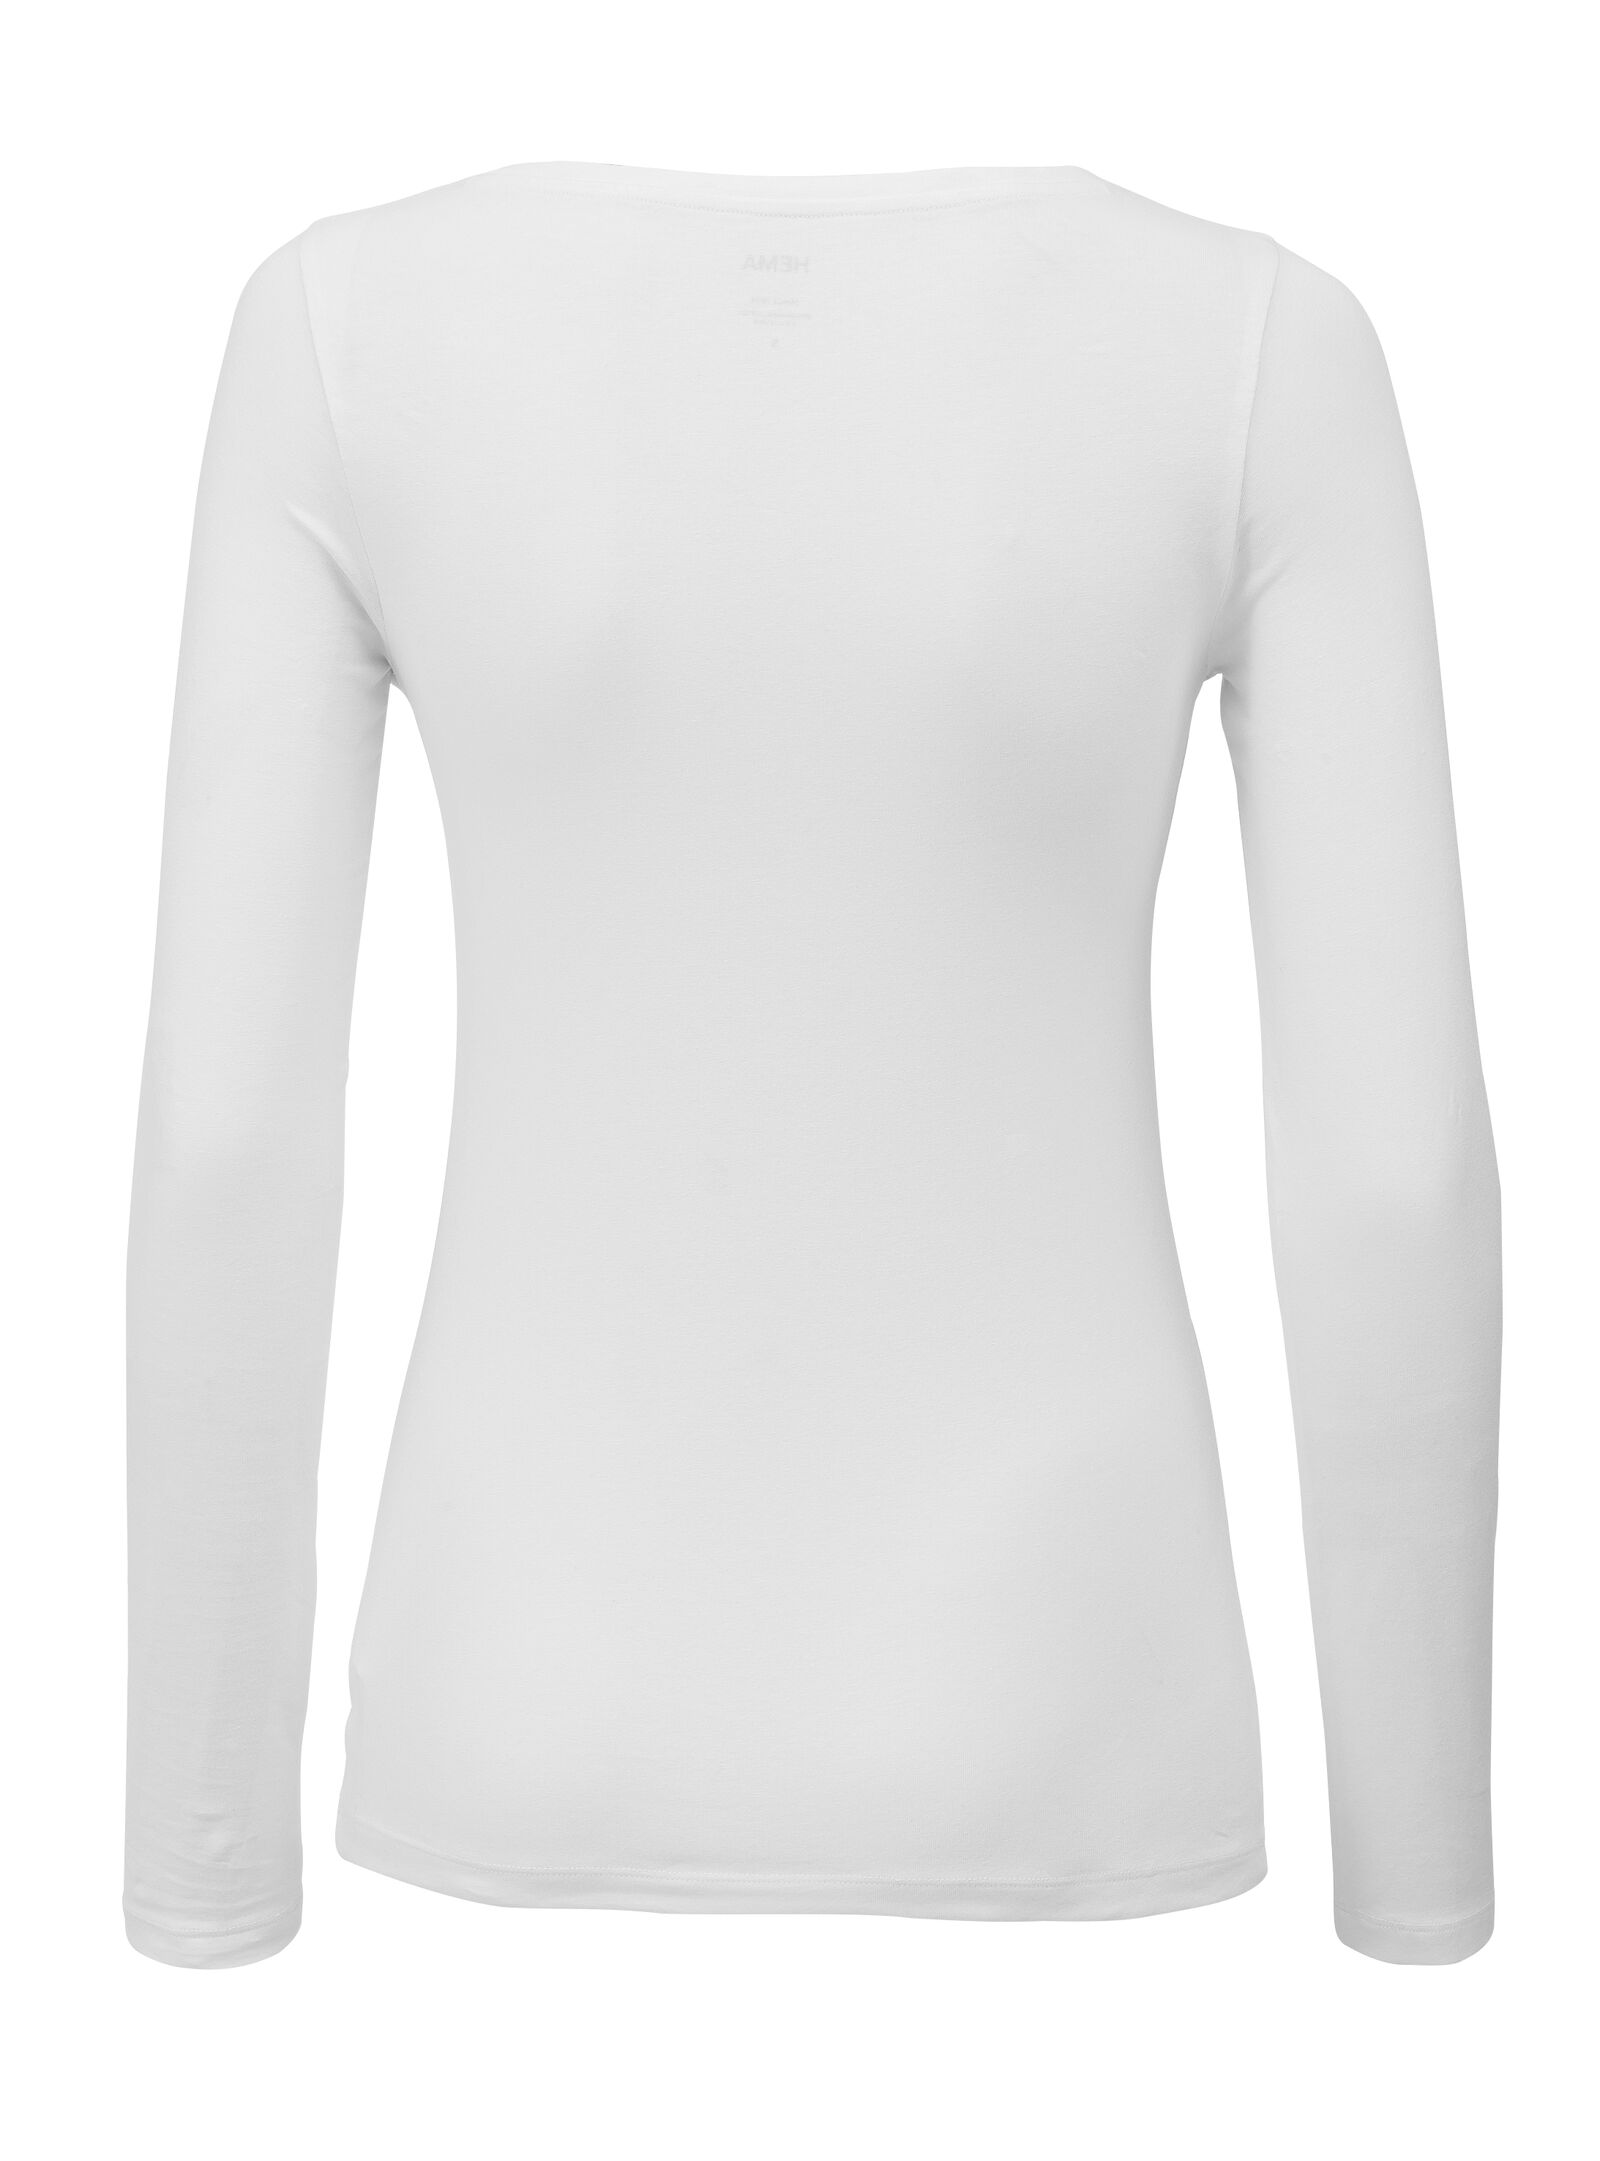 Damen-Shirt weiß weiß - 1000005403 - HEMA